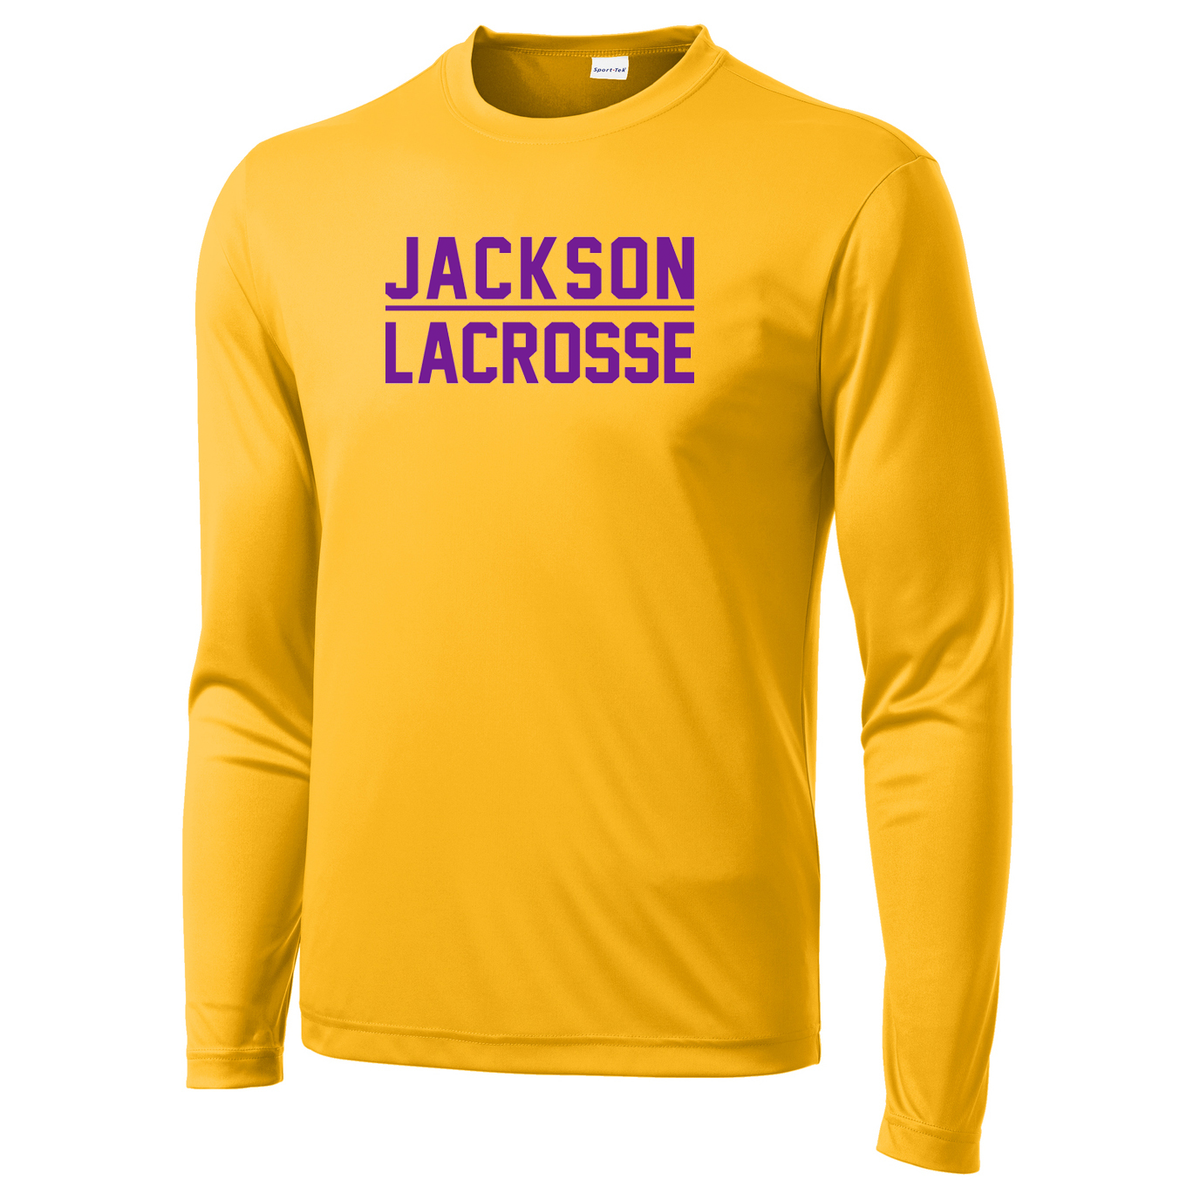 Jackson Lacrosse Long Sleeve Performance Shirt